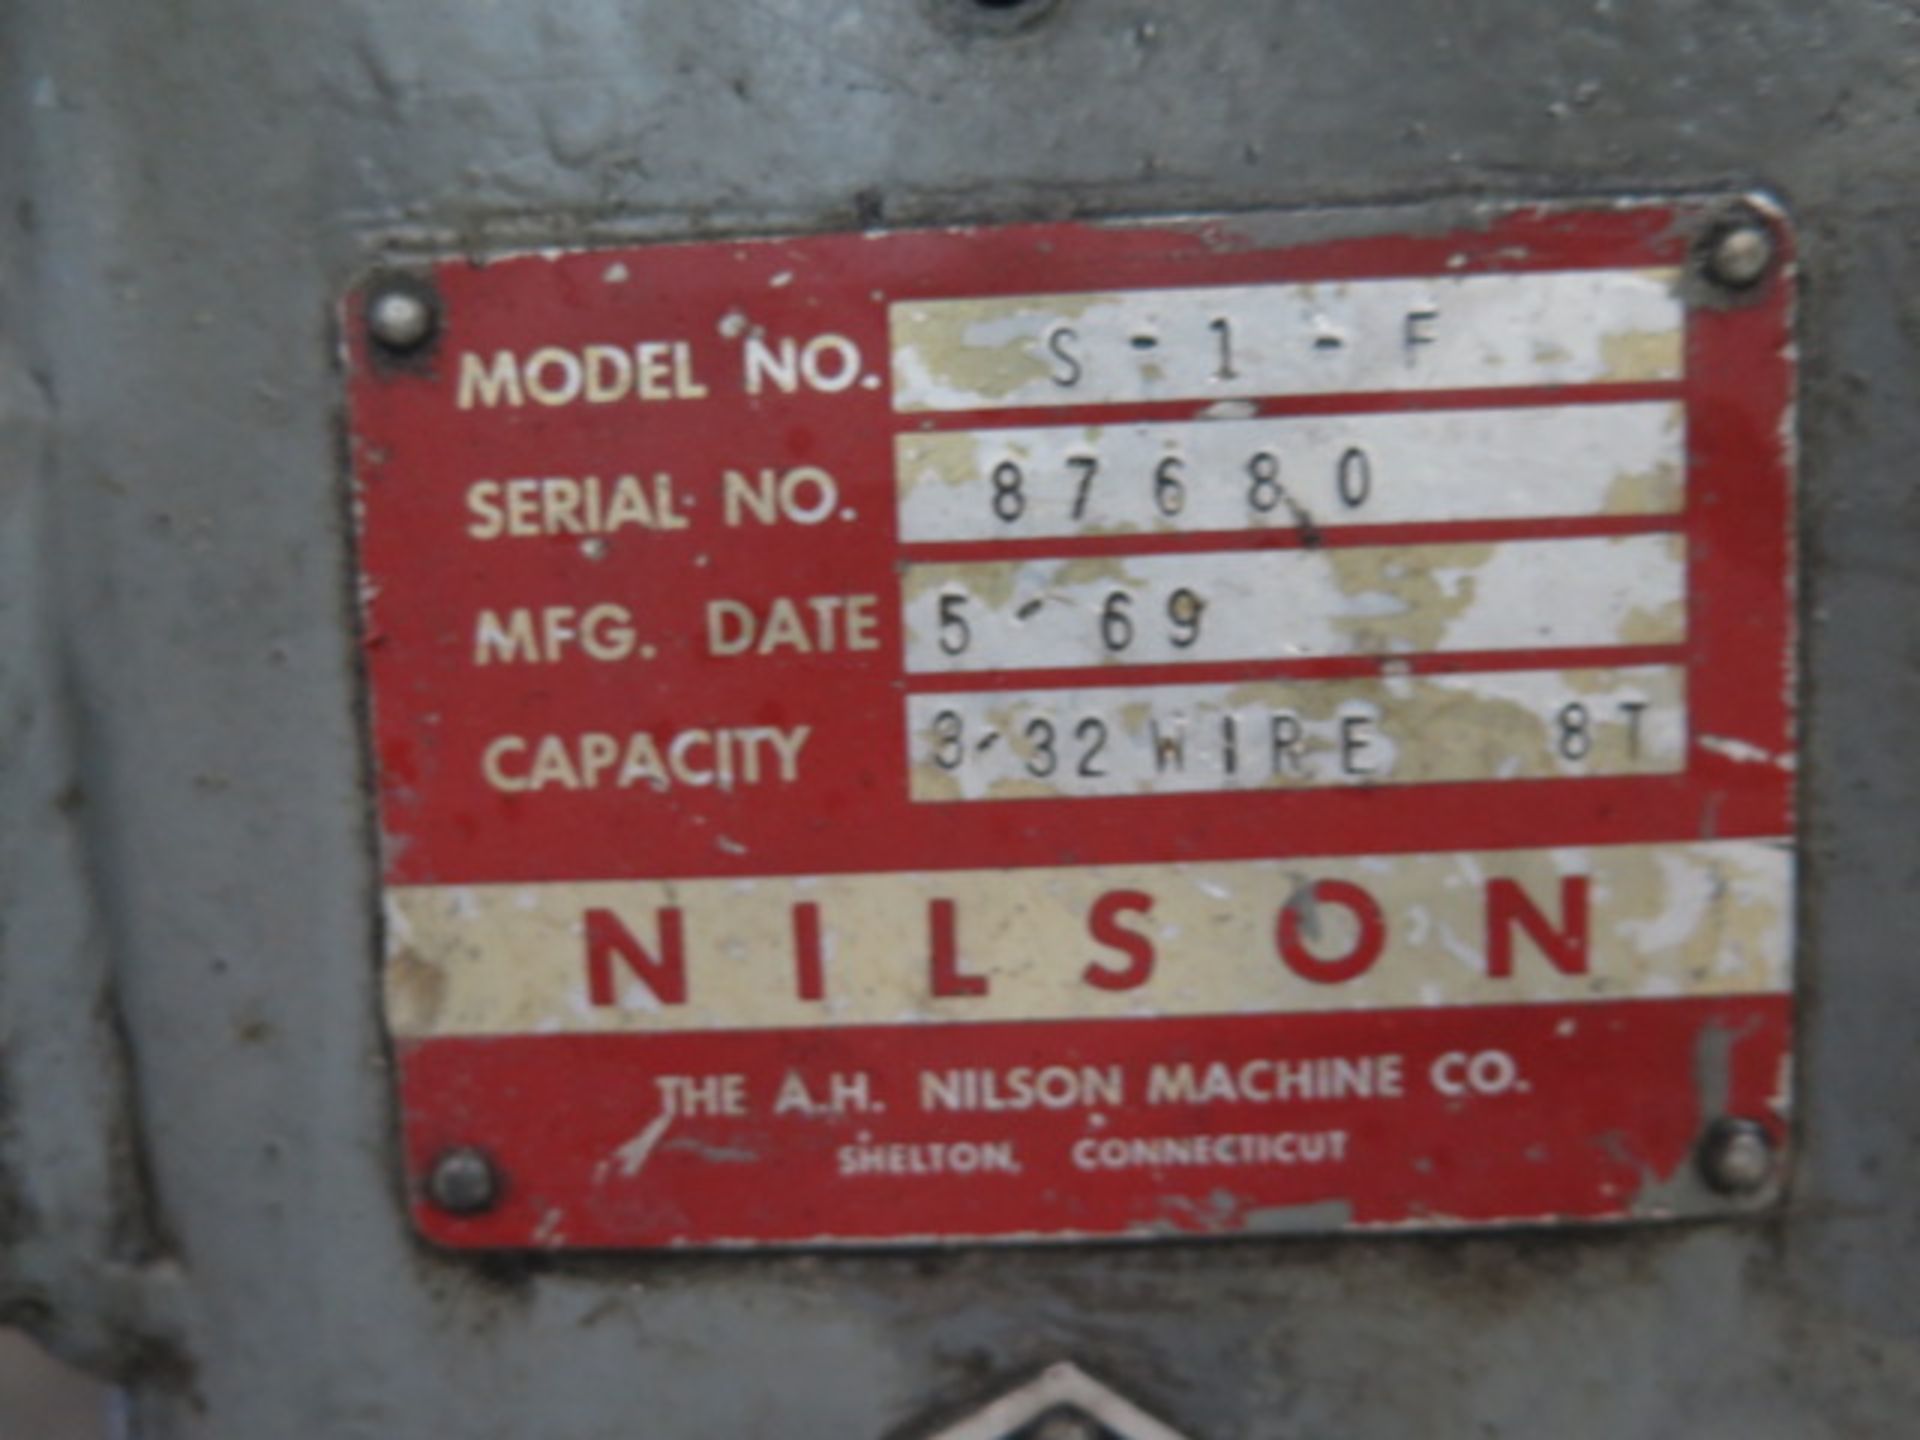 Nilson S-1-F .094" Cap 4-Slide Wire Forming Machine s/n 87680 w/ Straightner - Image 6 of 6